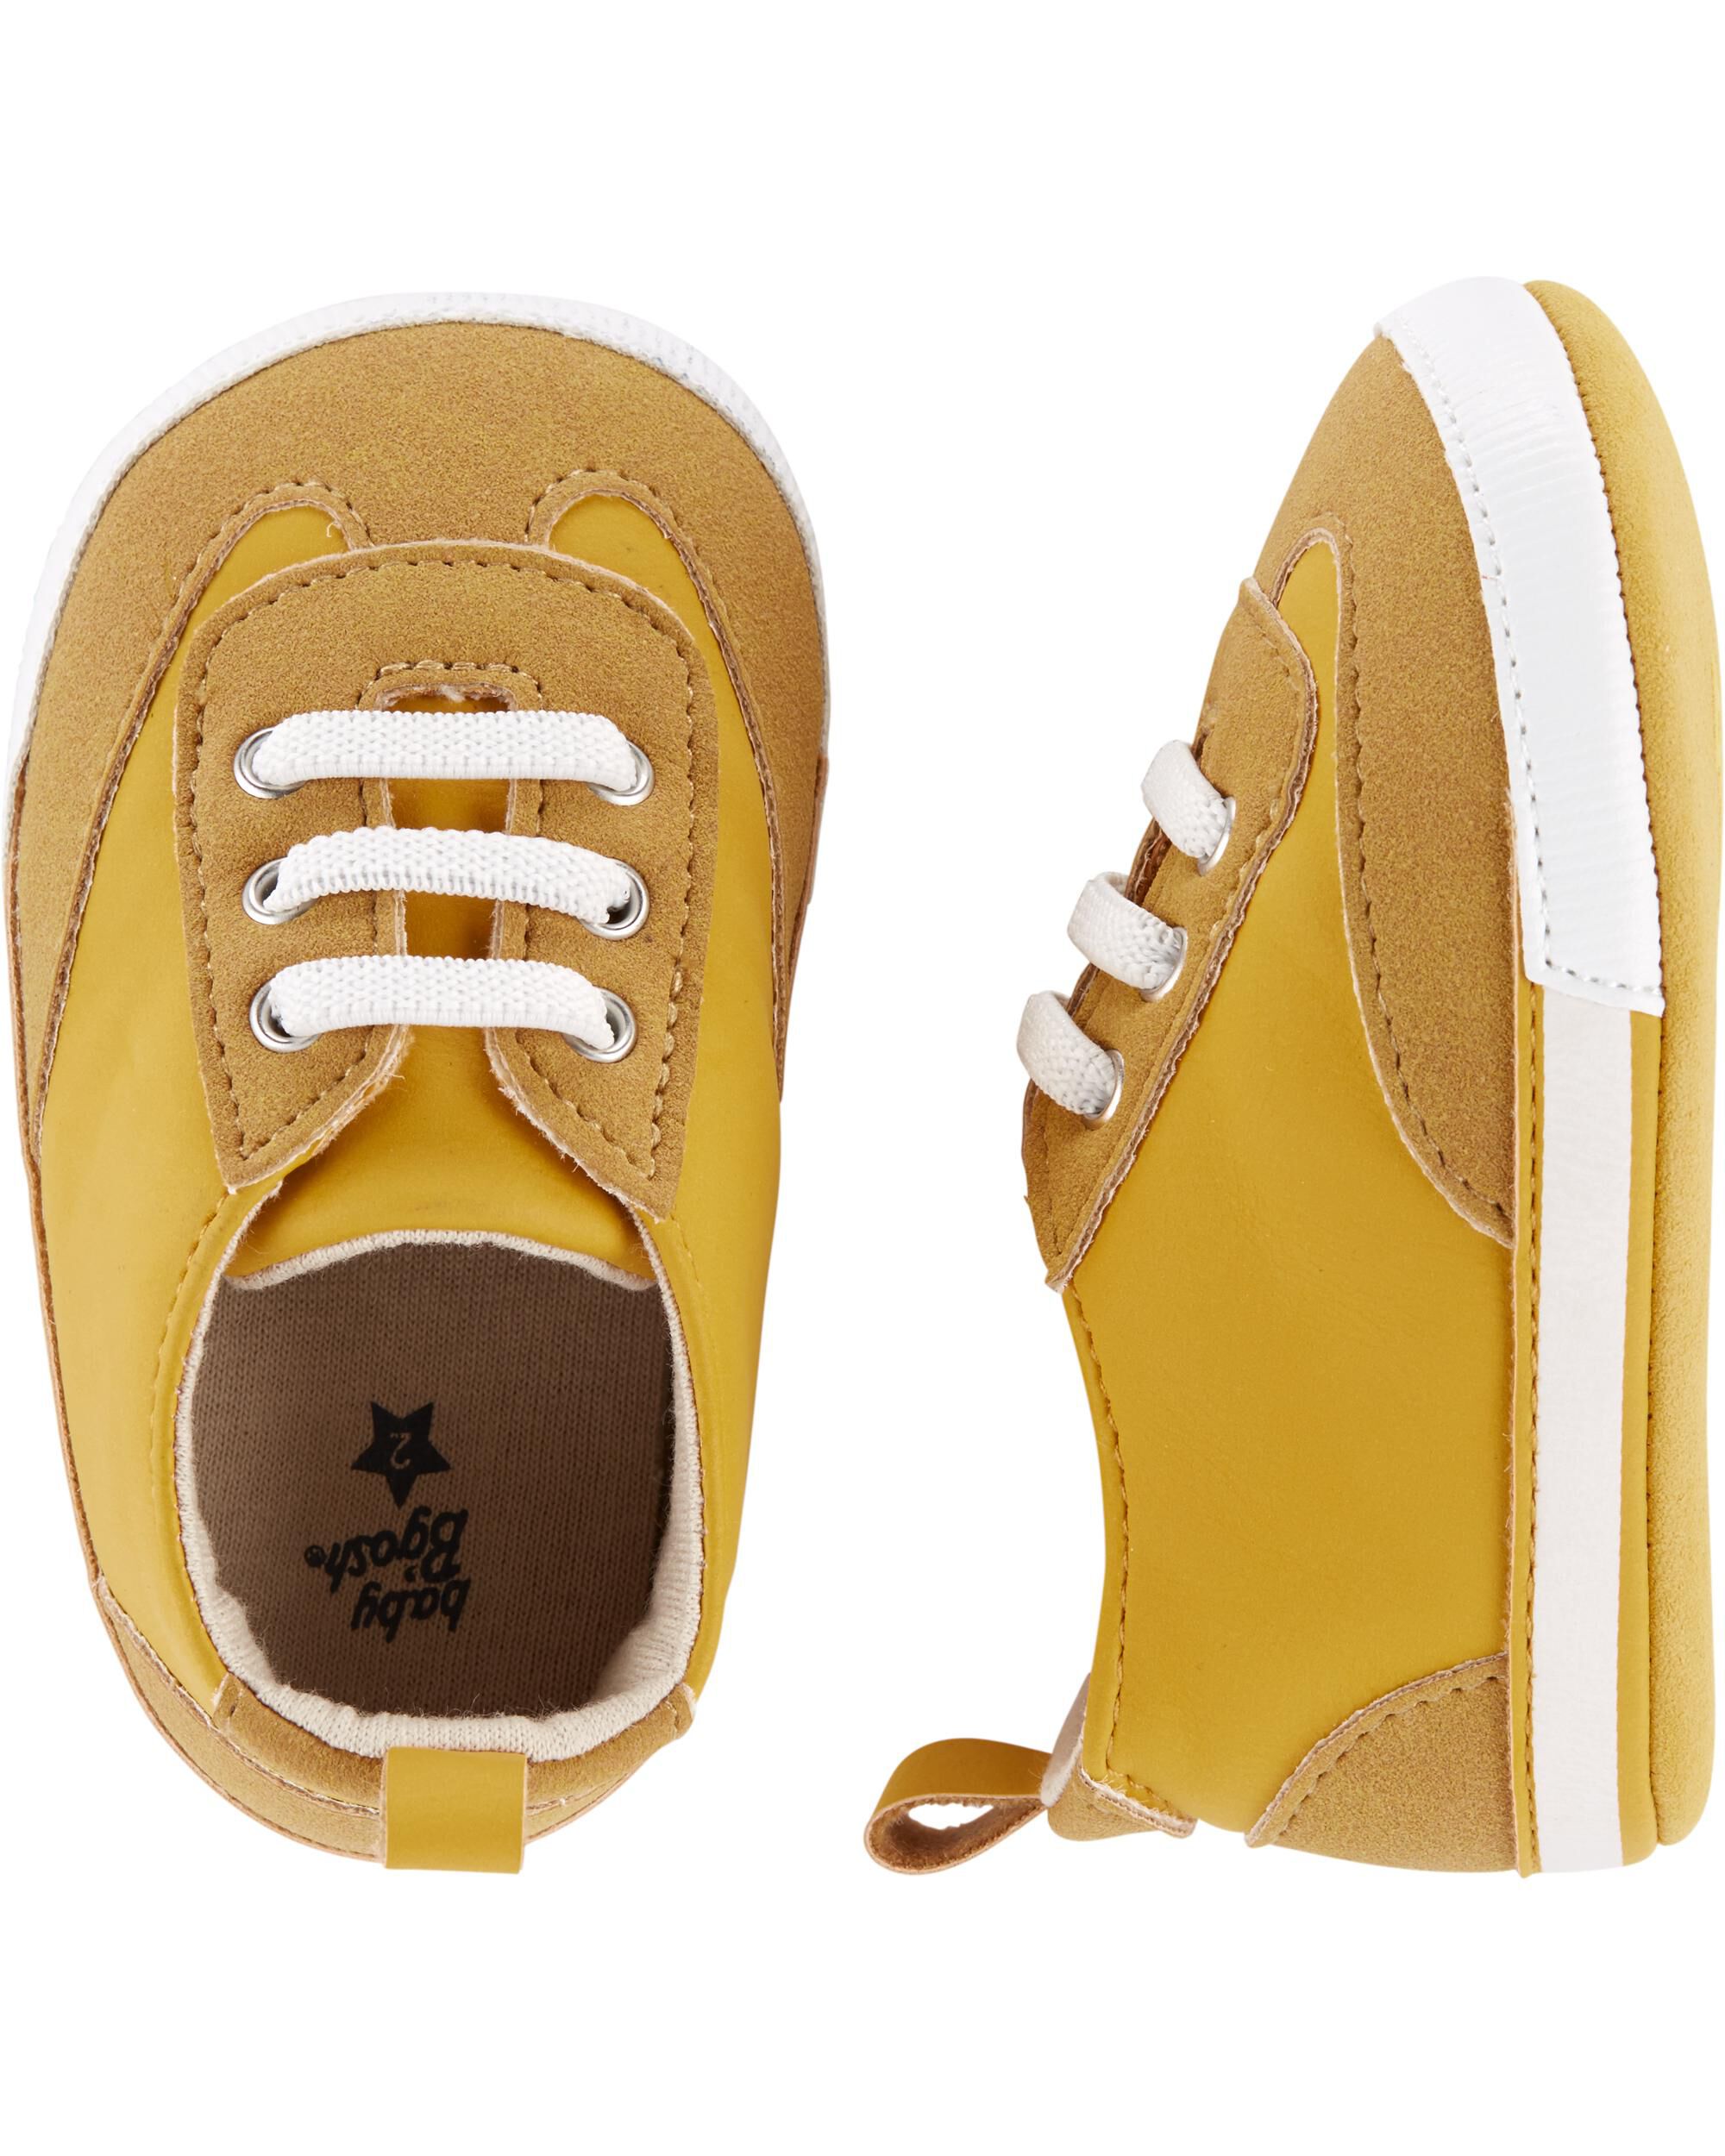 OshKosh Sneaker Baby Shoes | carters.com